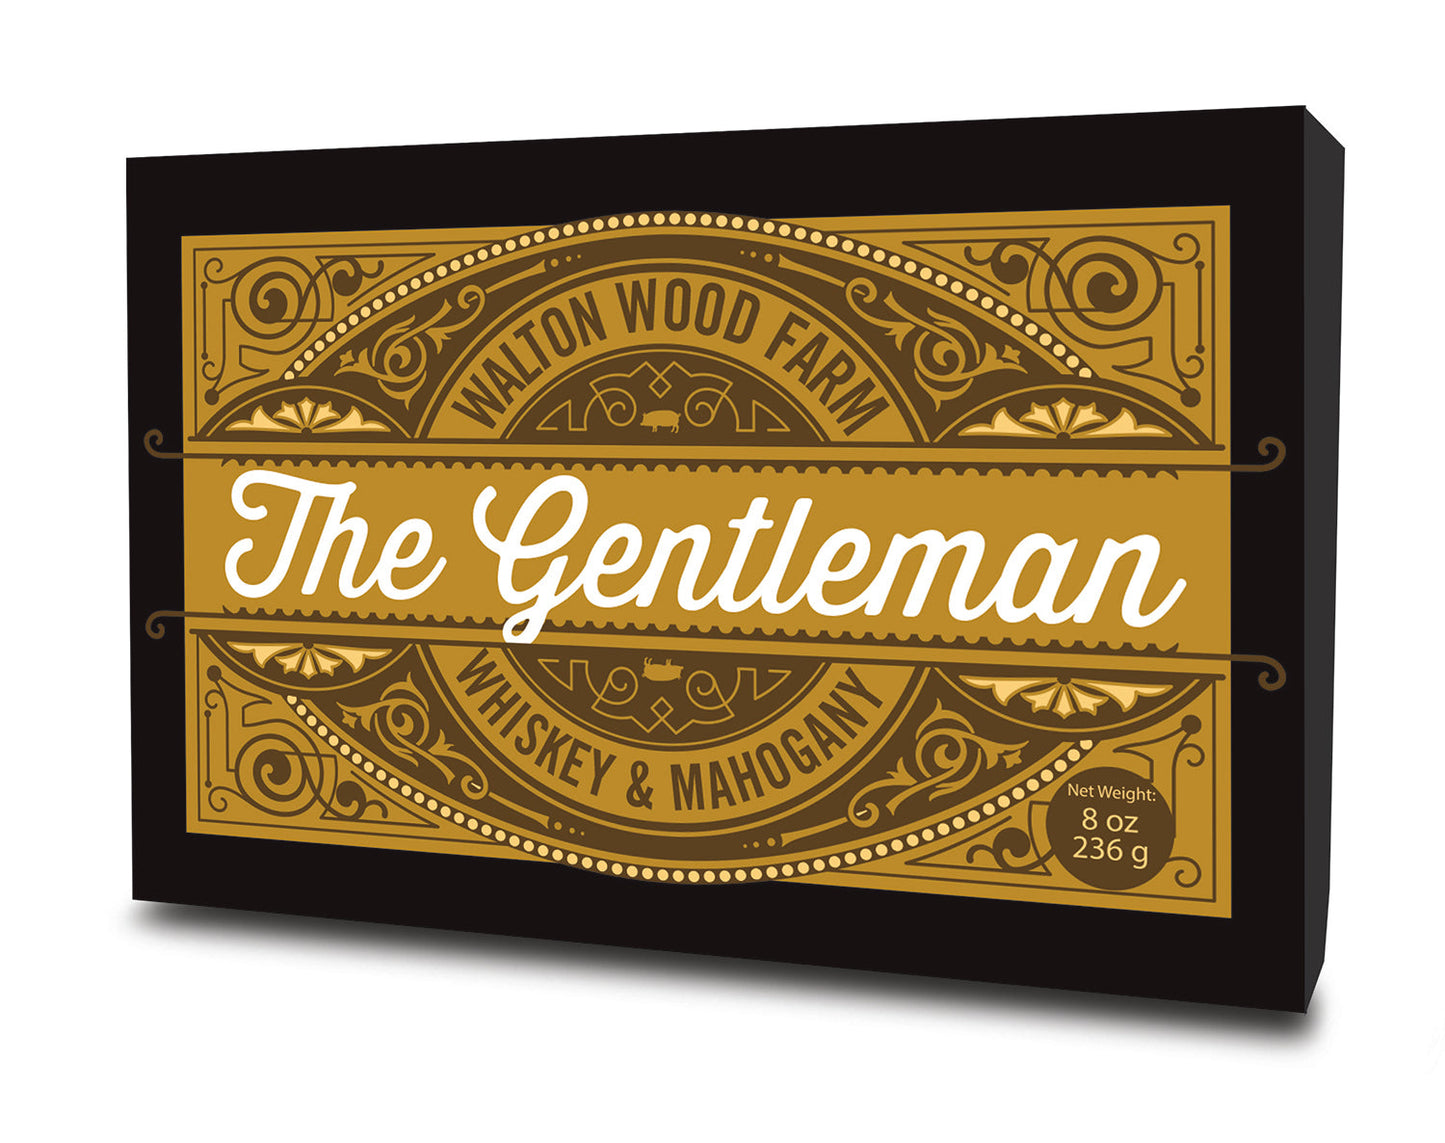 Gentleman Soap - Whiskey & Mahogany